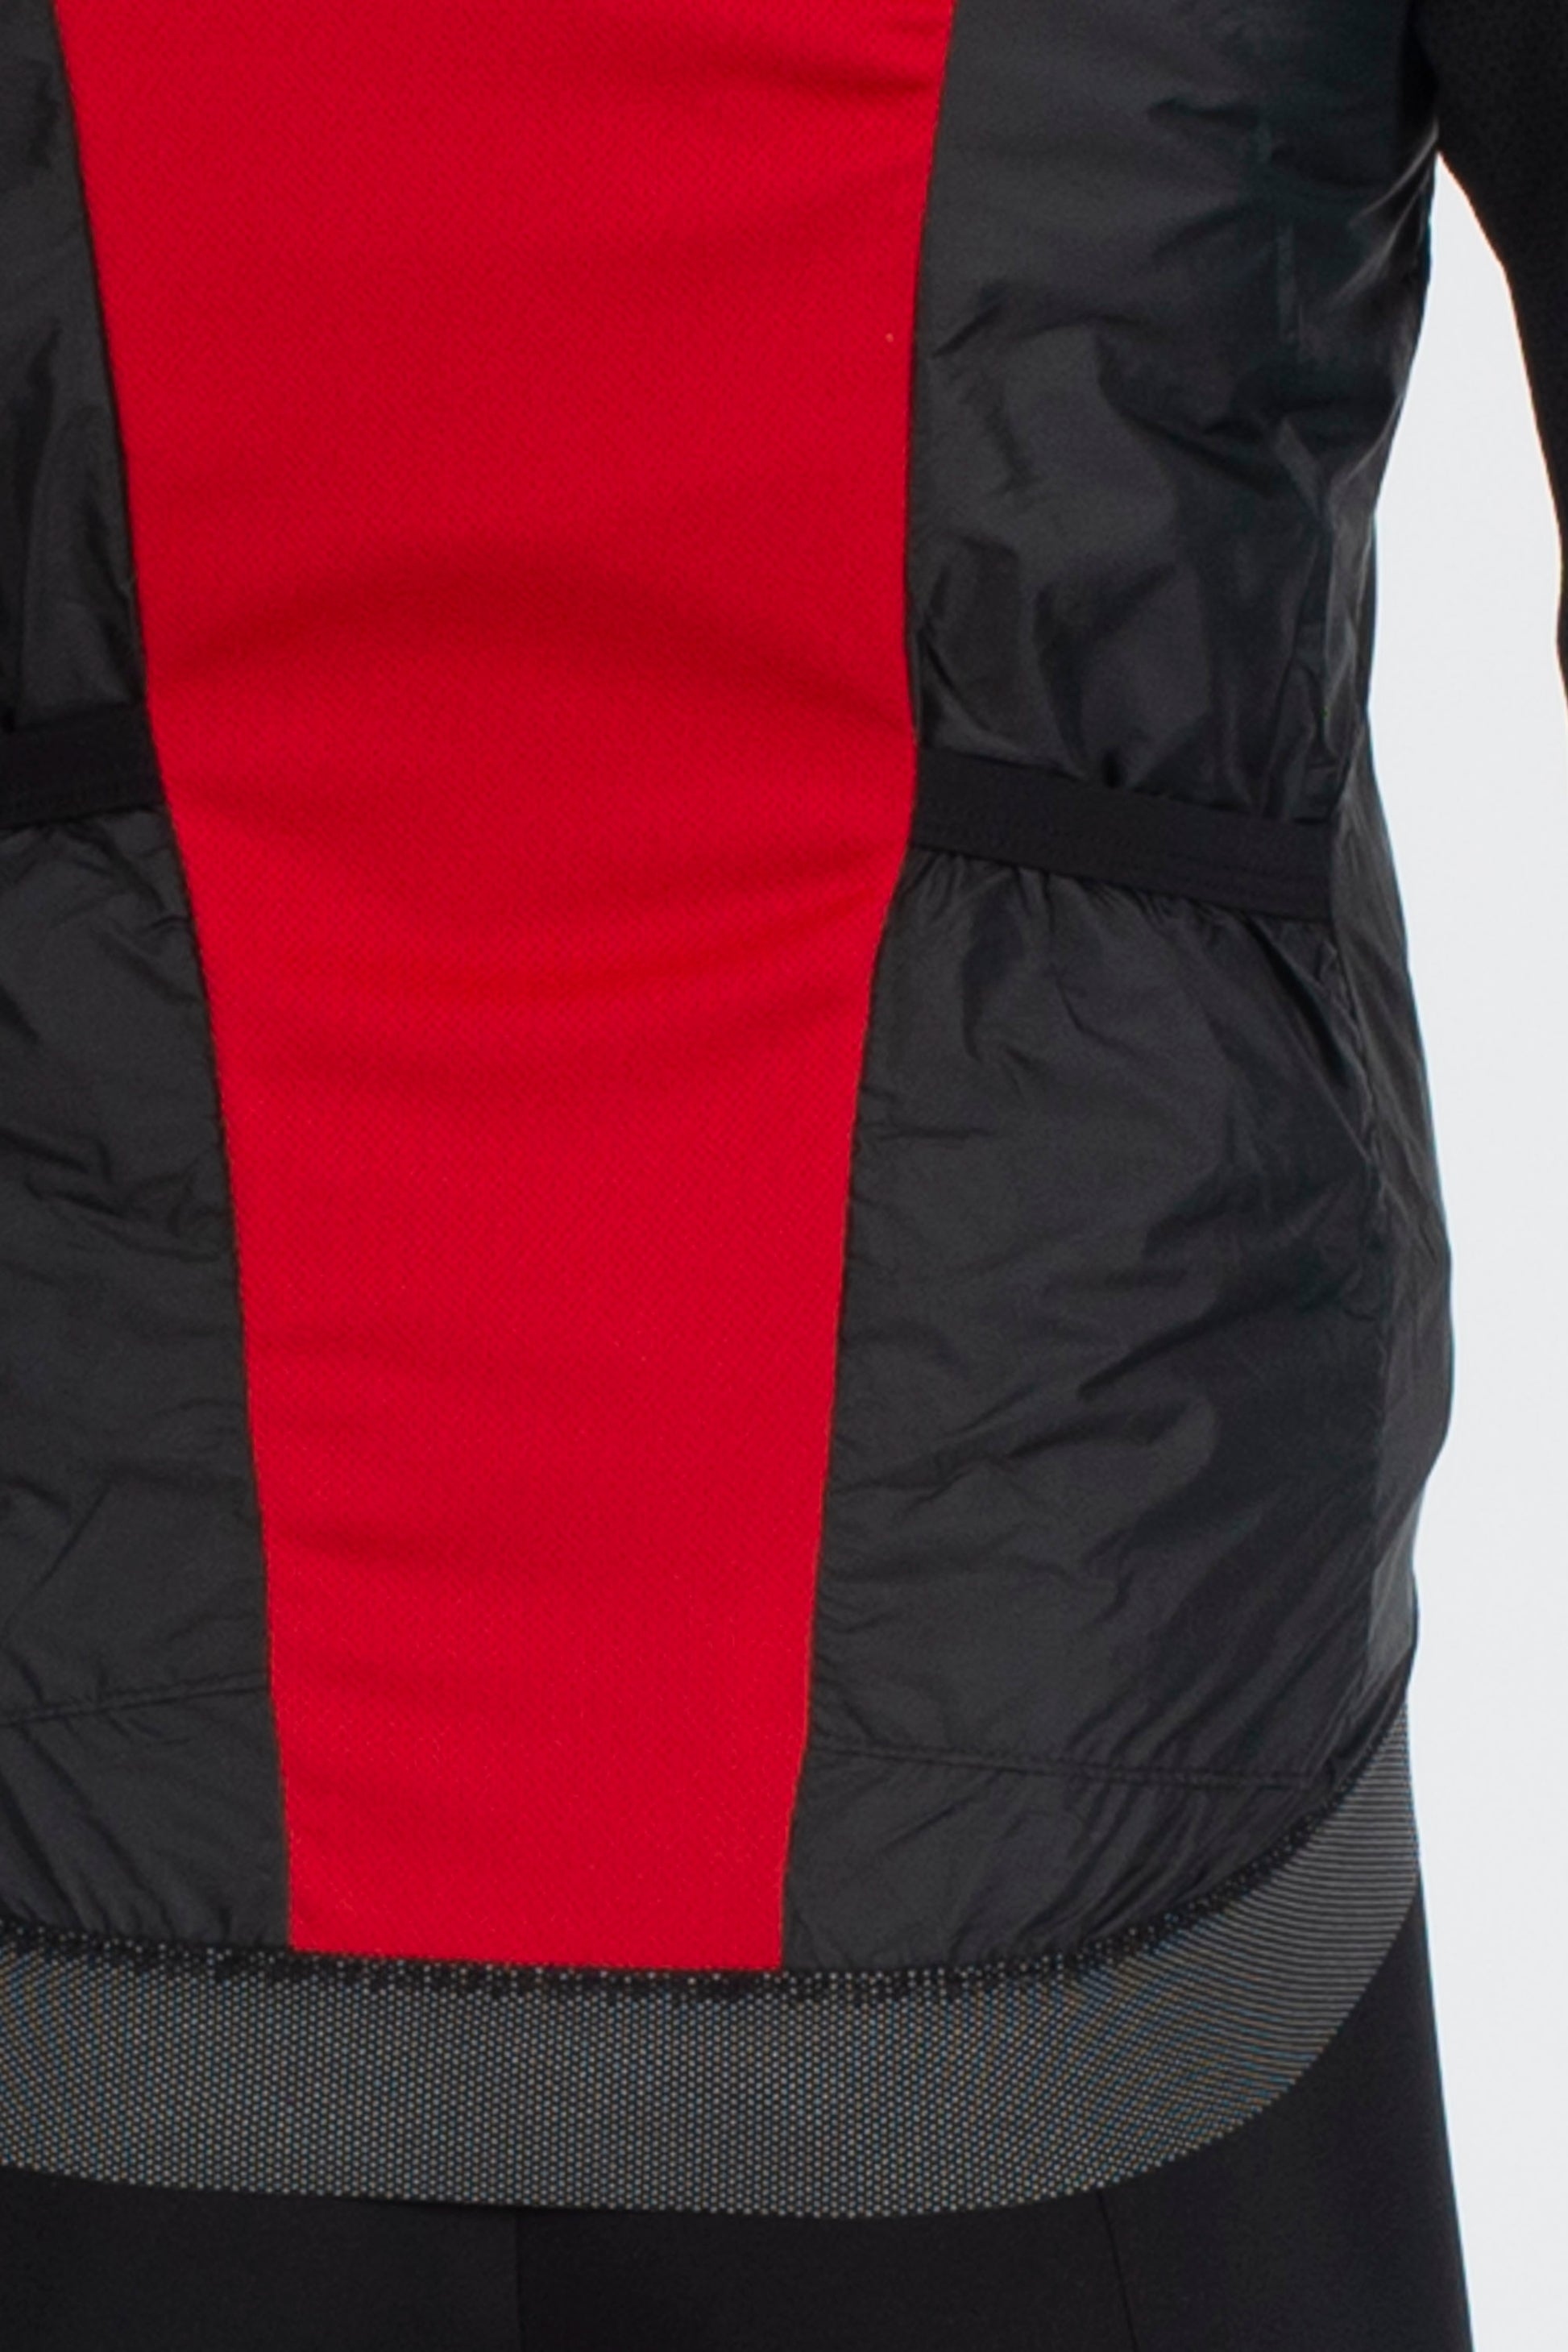 Skylon Gilet Black/Red - Lusso Cycle Wear